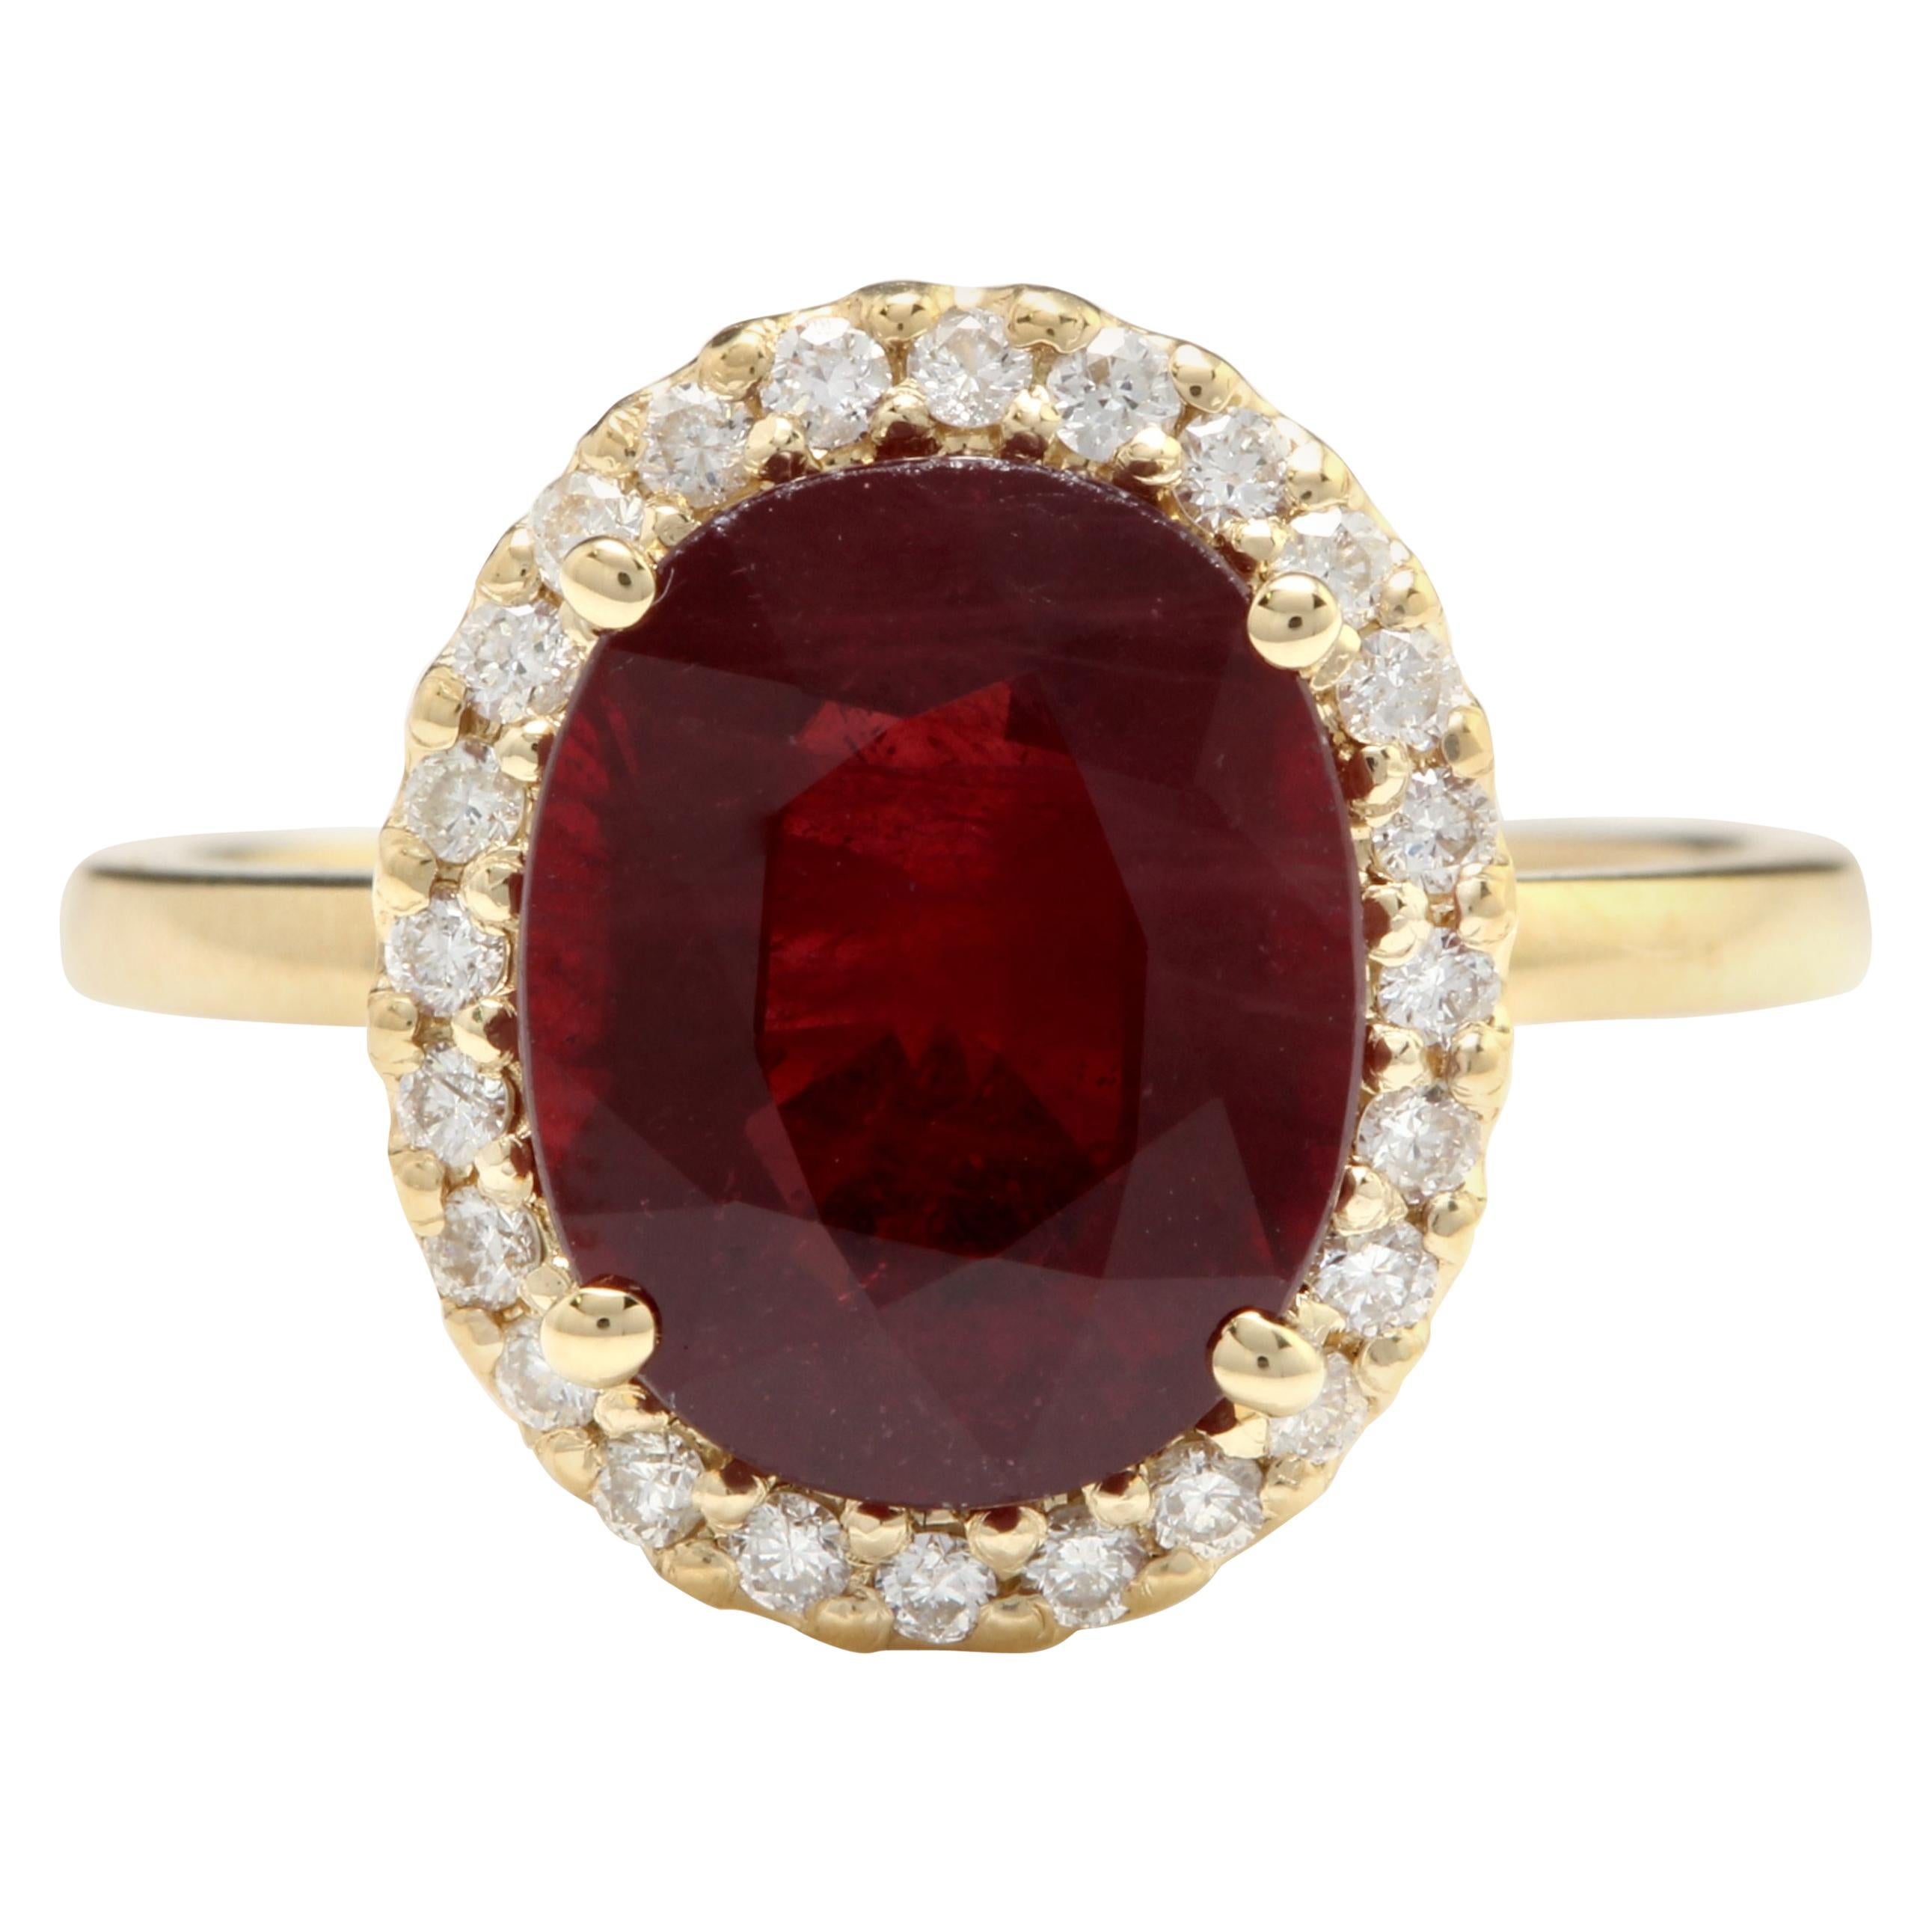 5.80 Carat Impressive Red Ruby and Natural Diamond 14 Karat Yellow Gold Ring